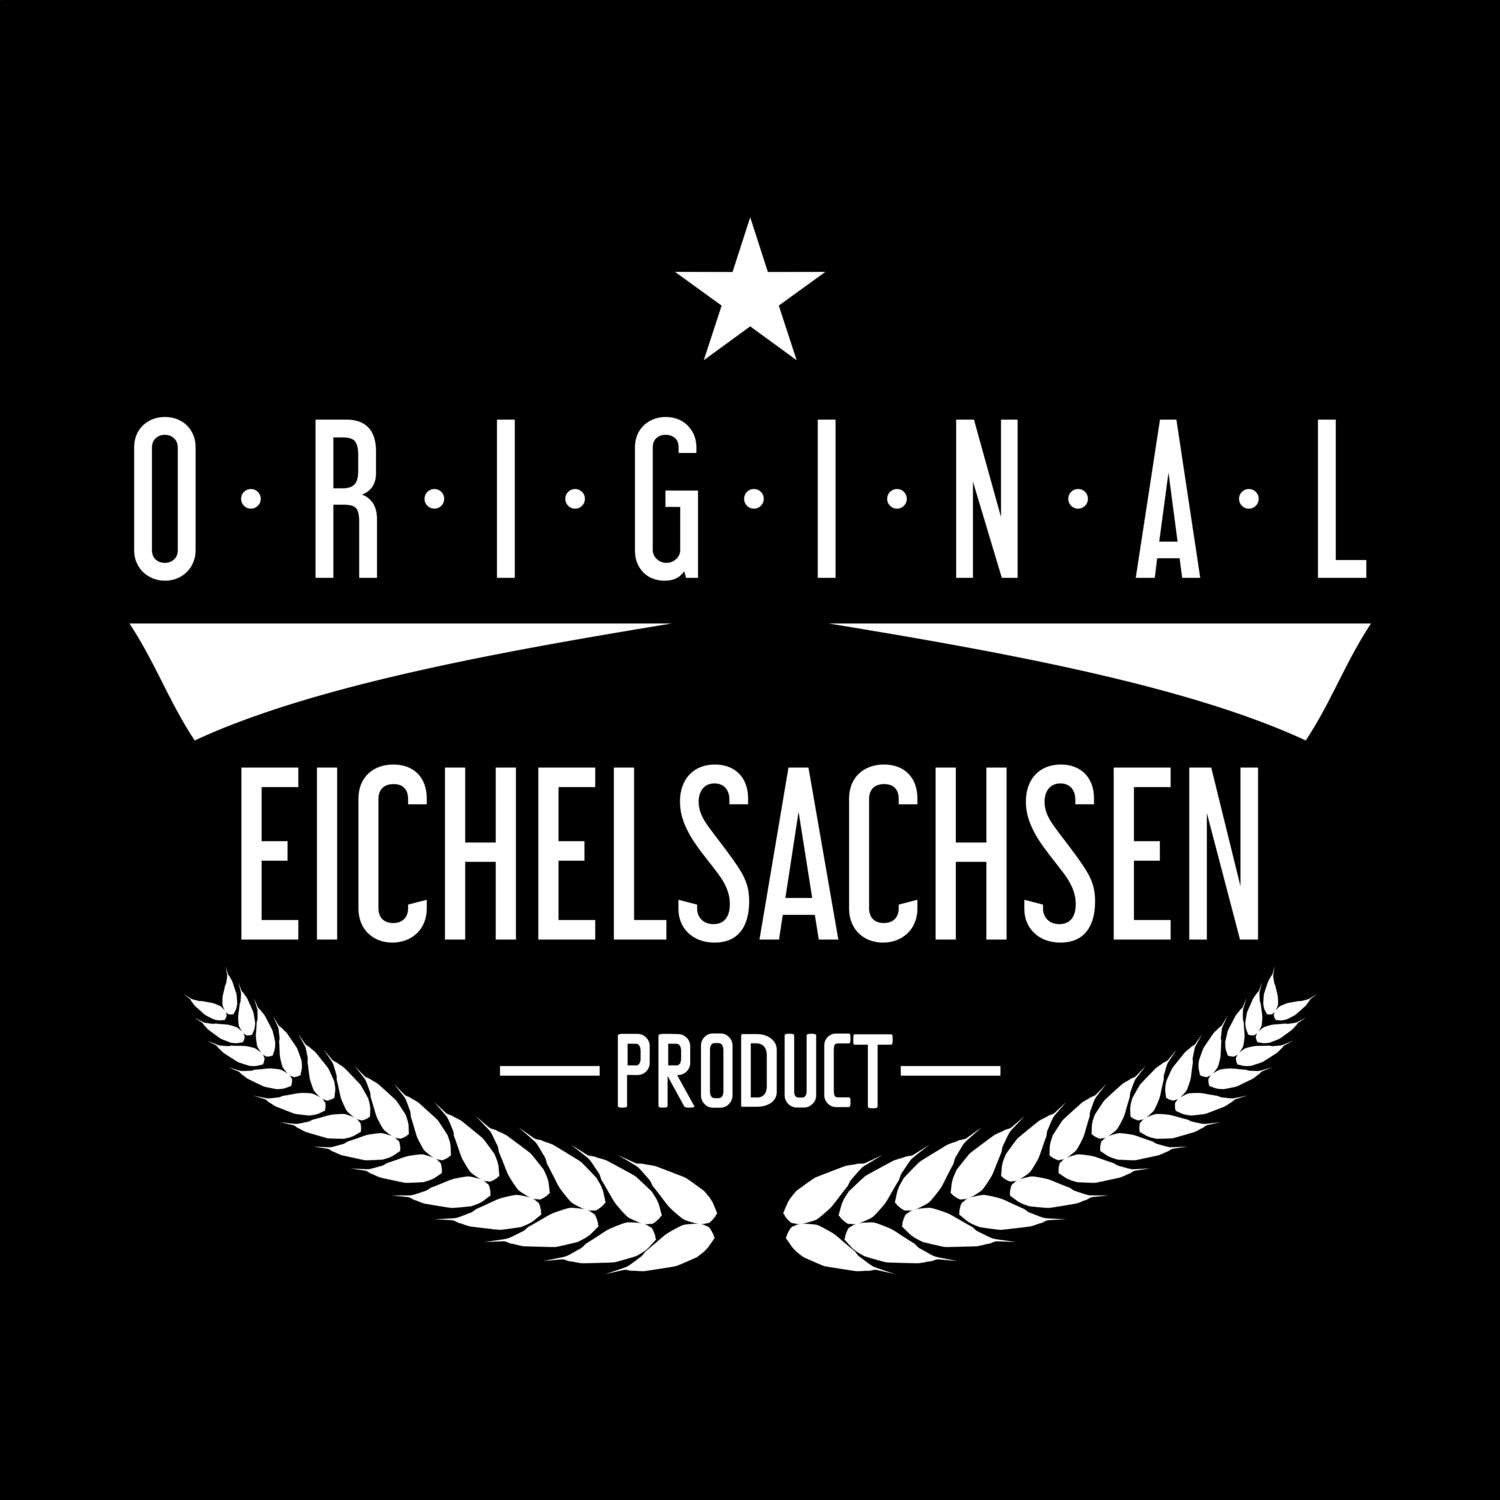 Eichelsachsen T-Shirt »Original Product«